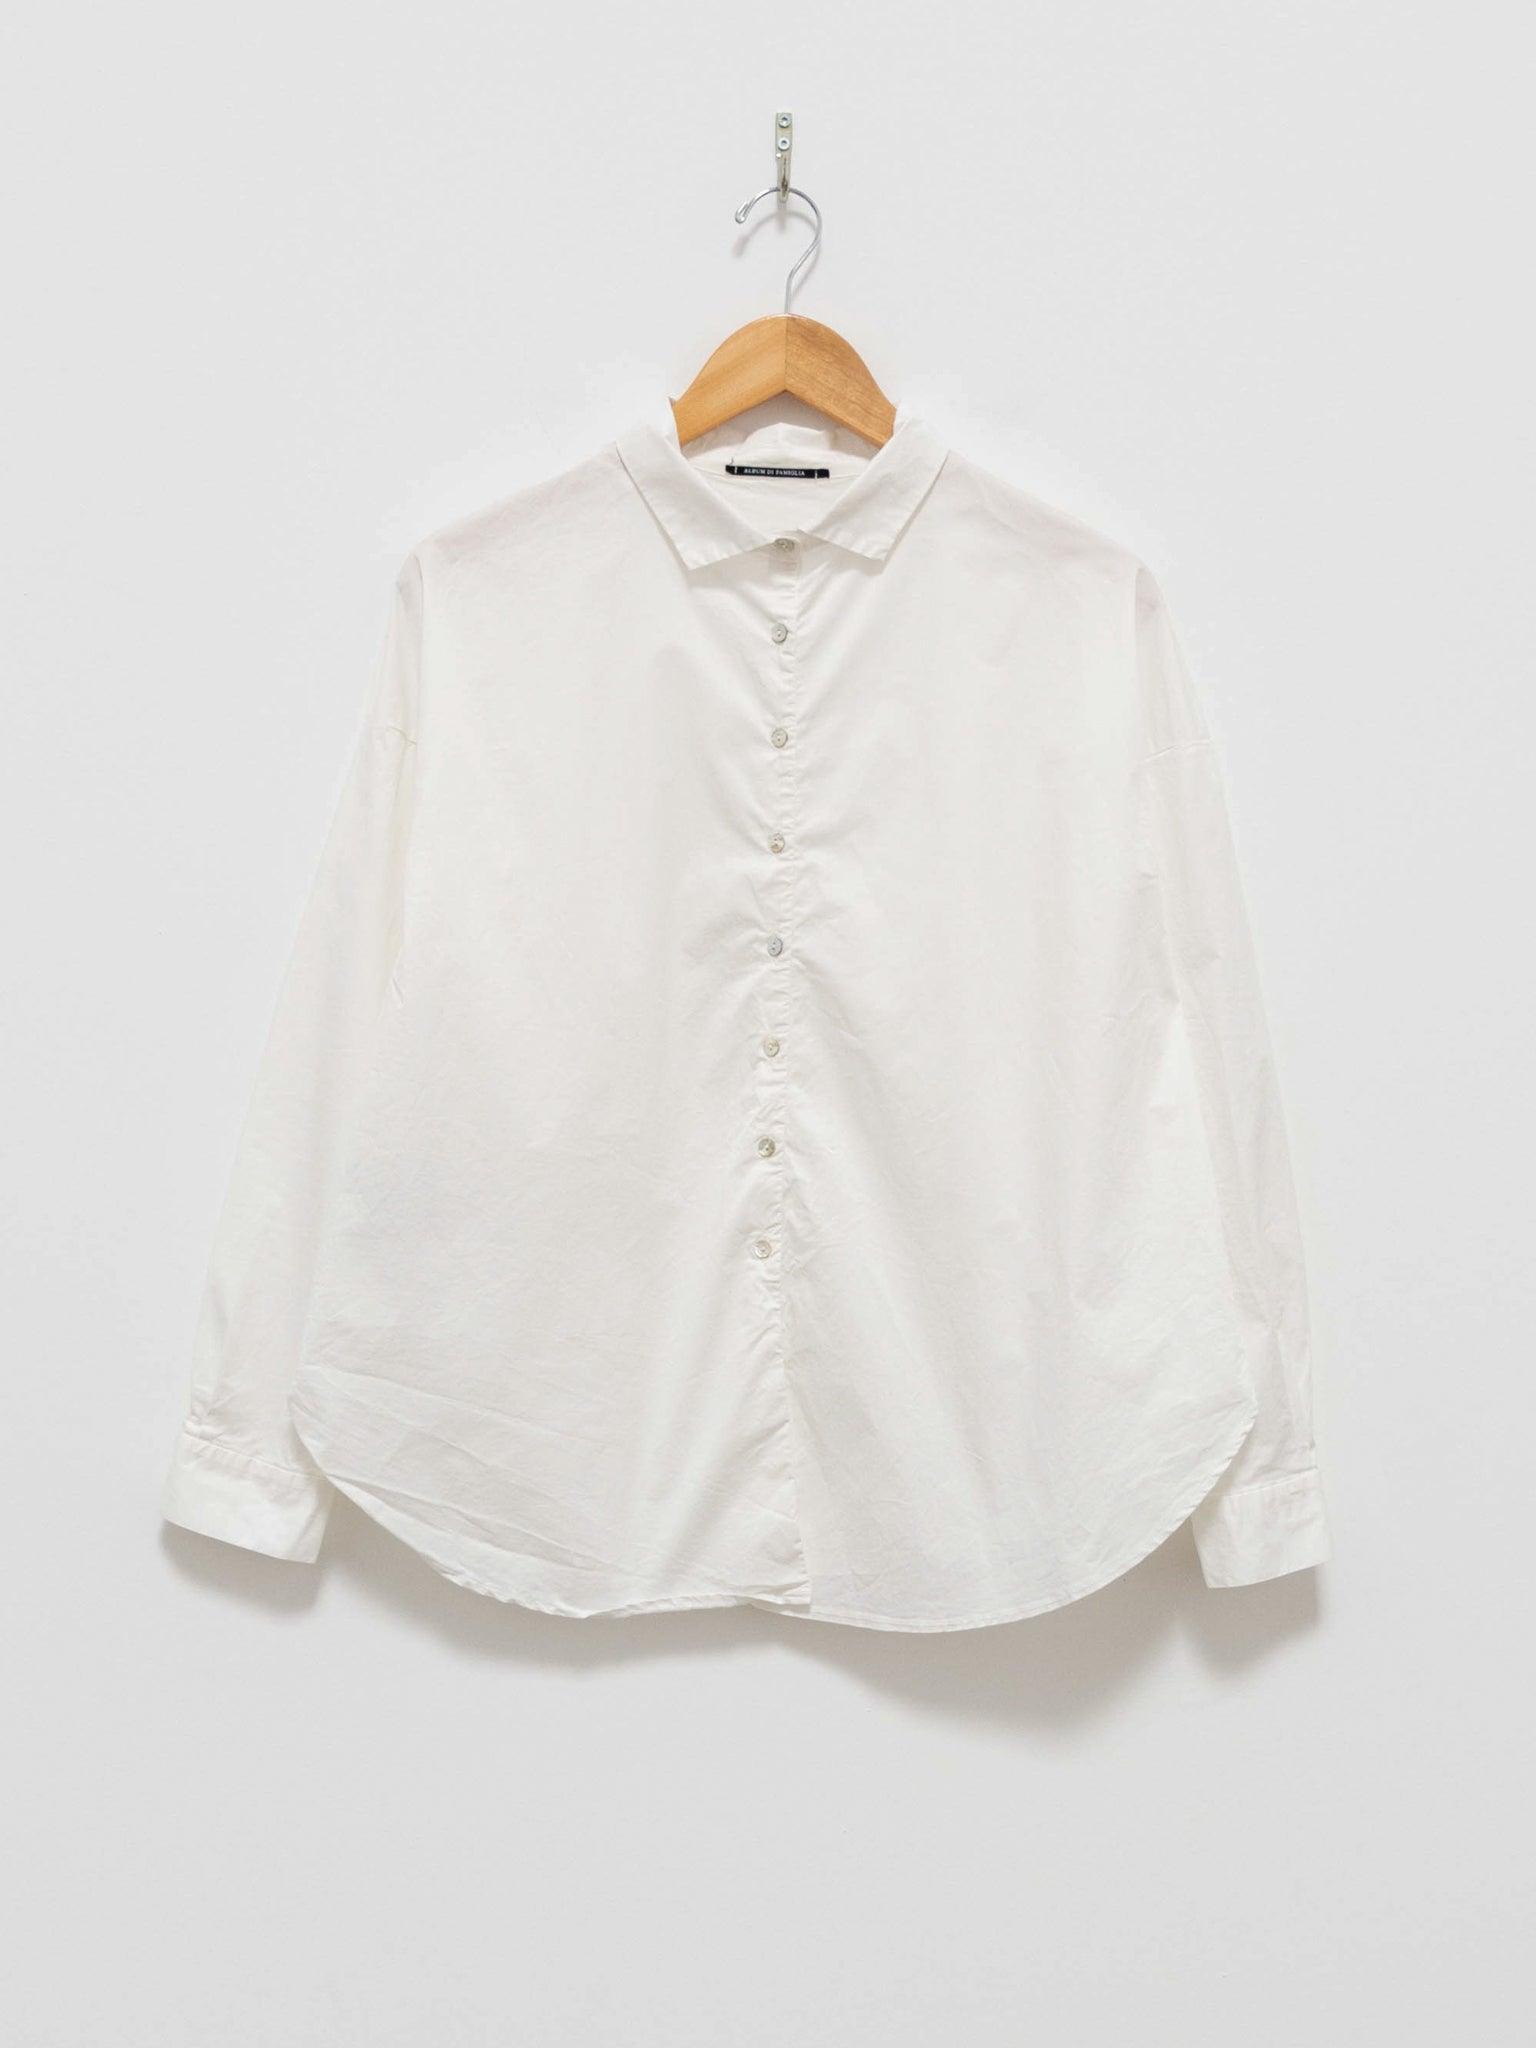 Namu Shop - Album Di Famiglia Short Collar Shirt TS - Milk